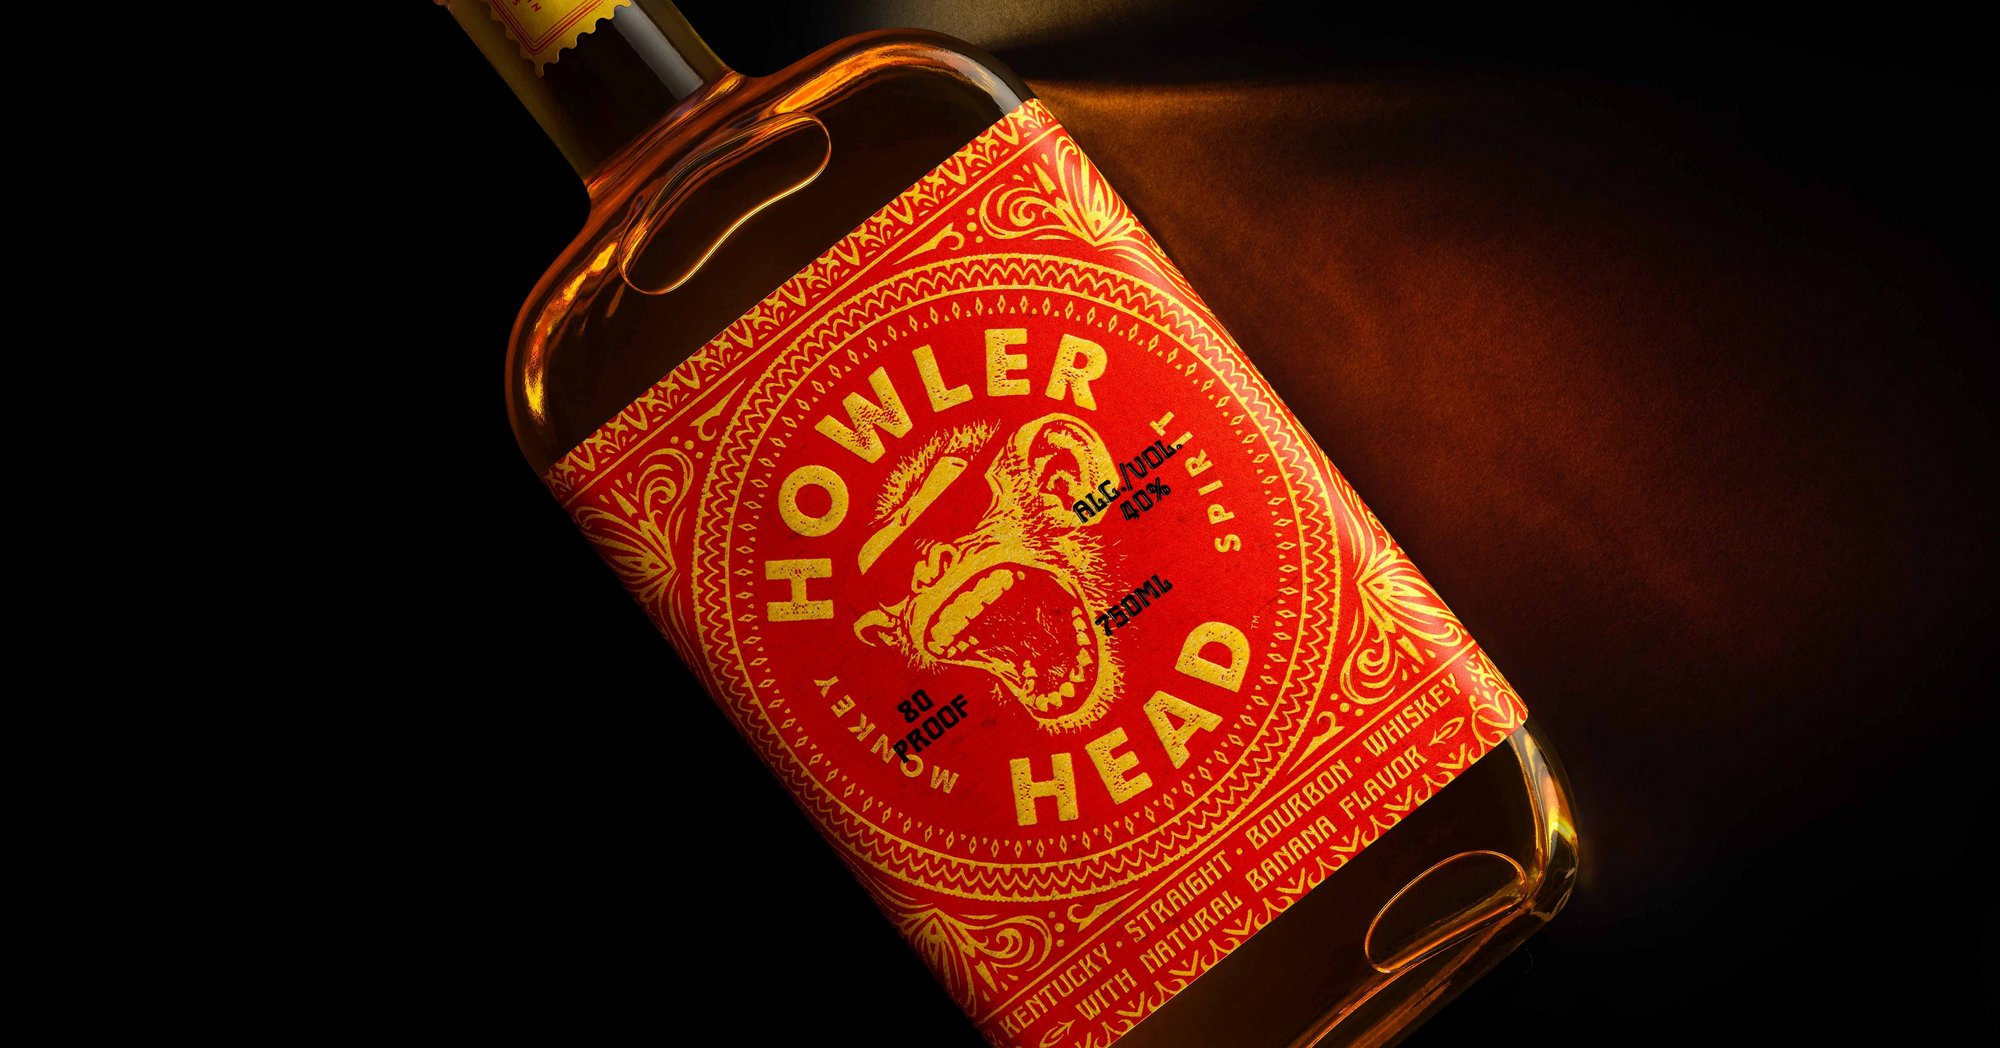 who makes howler head whiskey